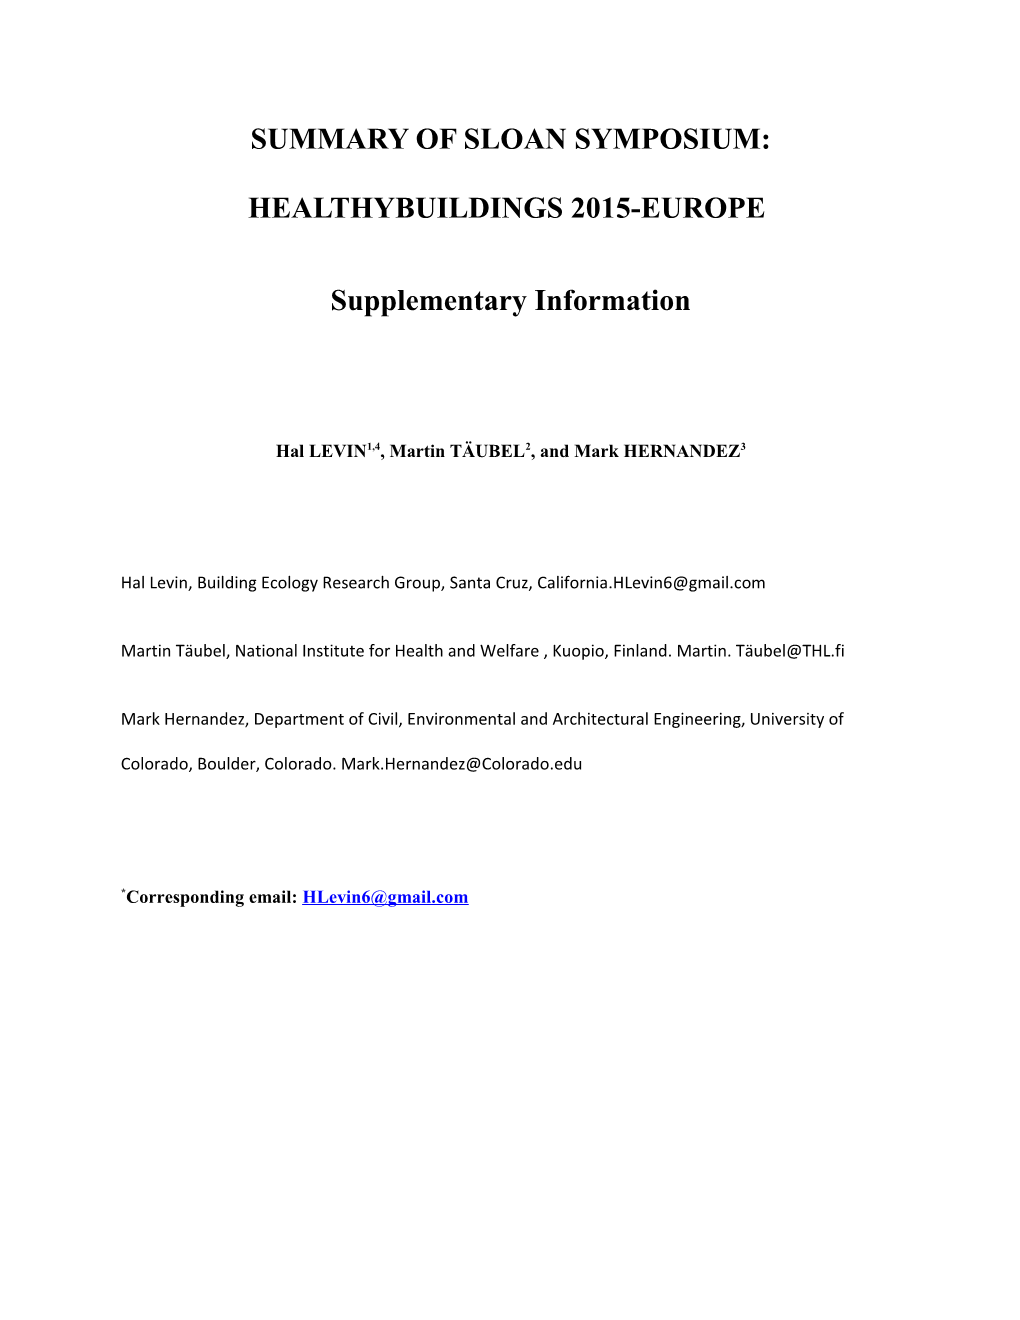 Summary of Sloan Symposium: Healthybuildings 2015-Europe